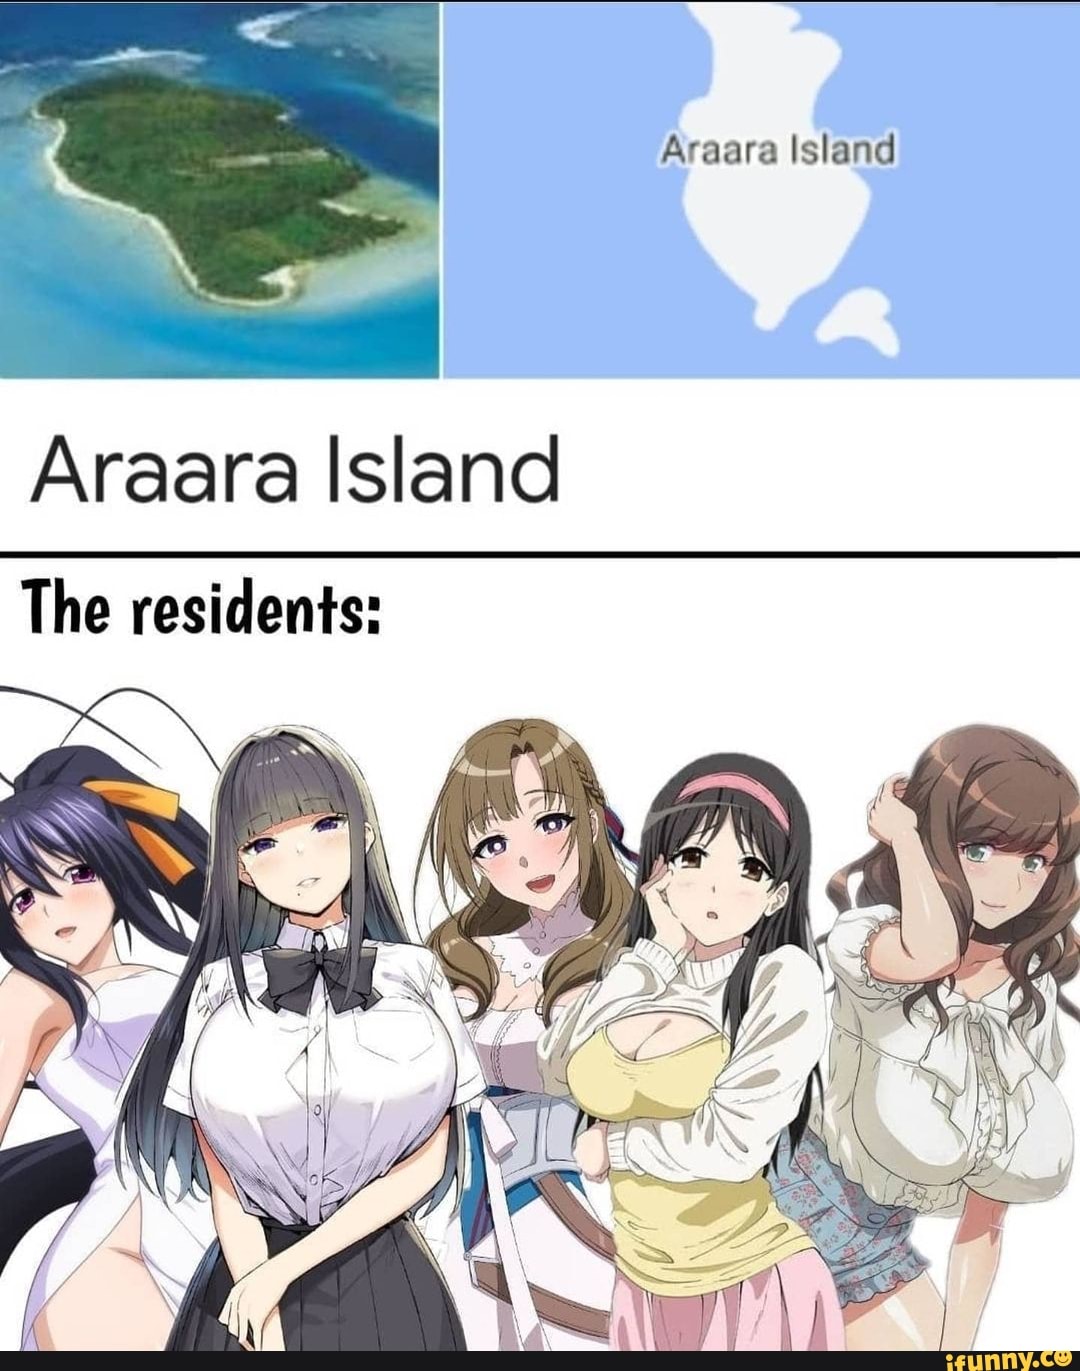 Fru kande sko Ara ara Island Araara Island The residents: - )